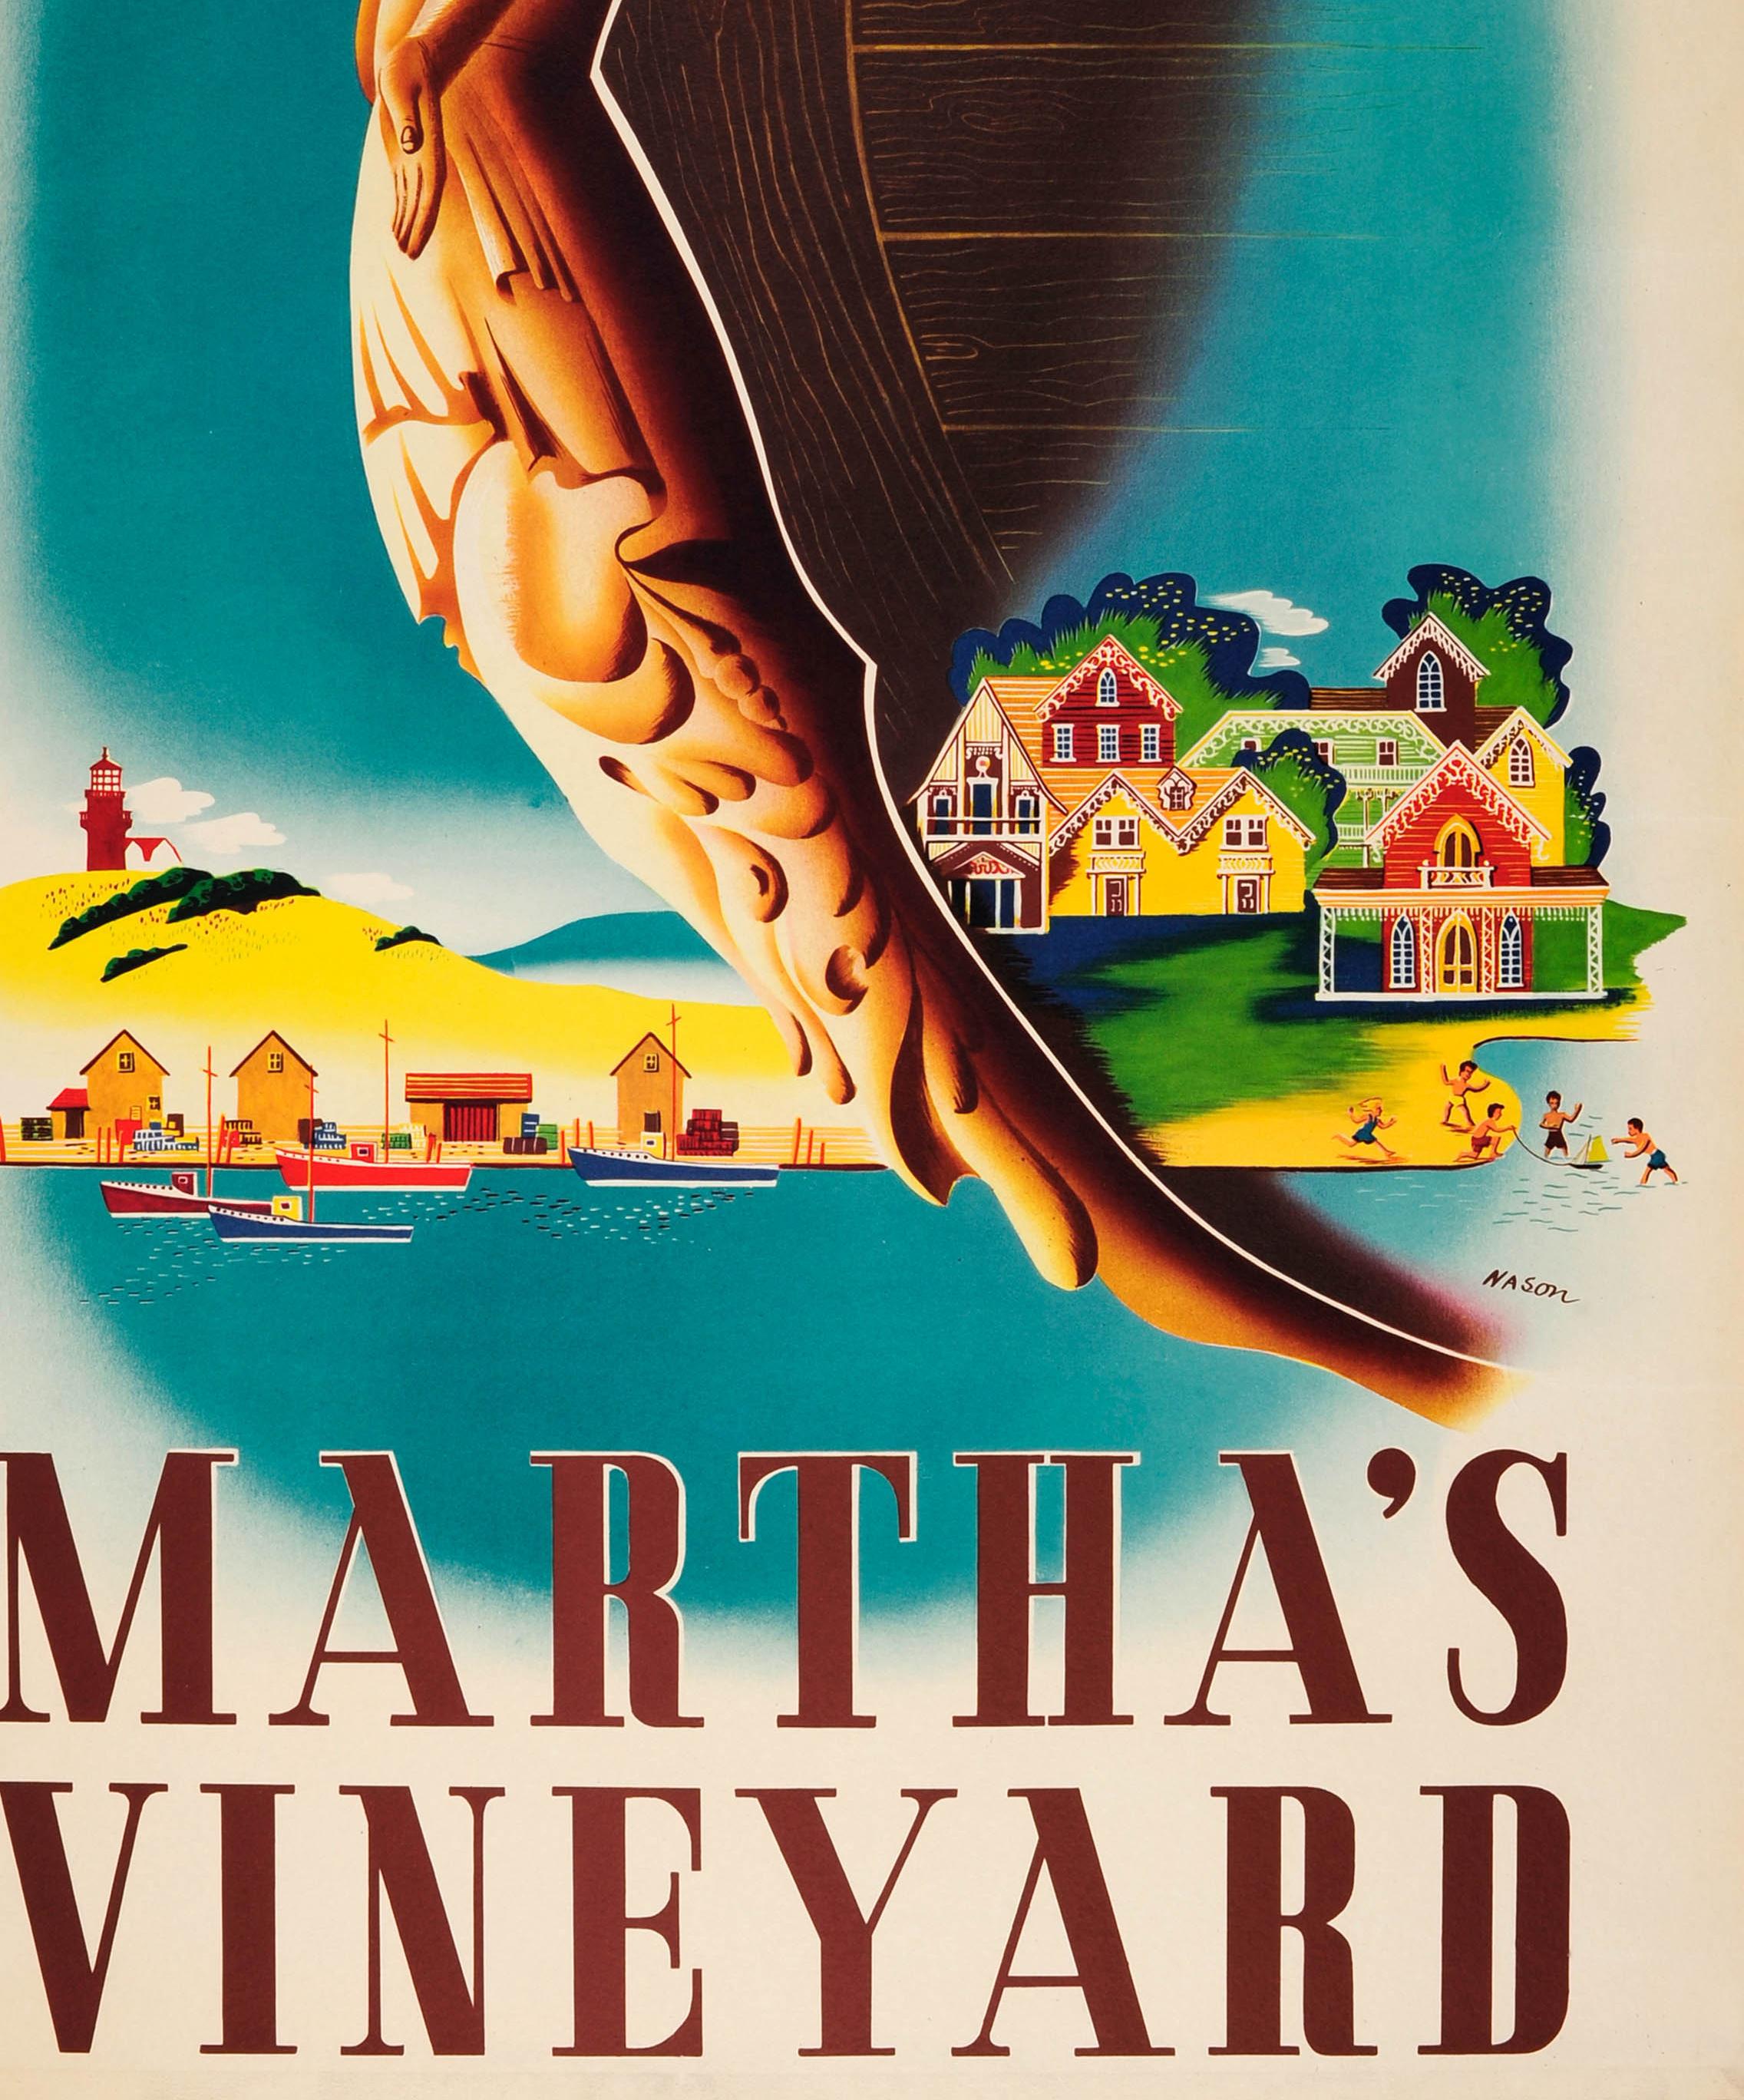 1930s Nantucket New York England Vintage Railroad Travel Advertisement Poster 